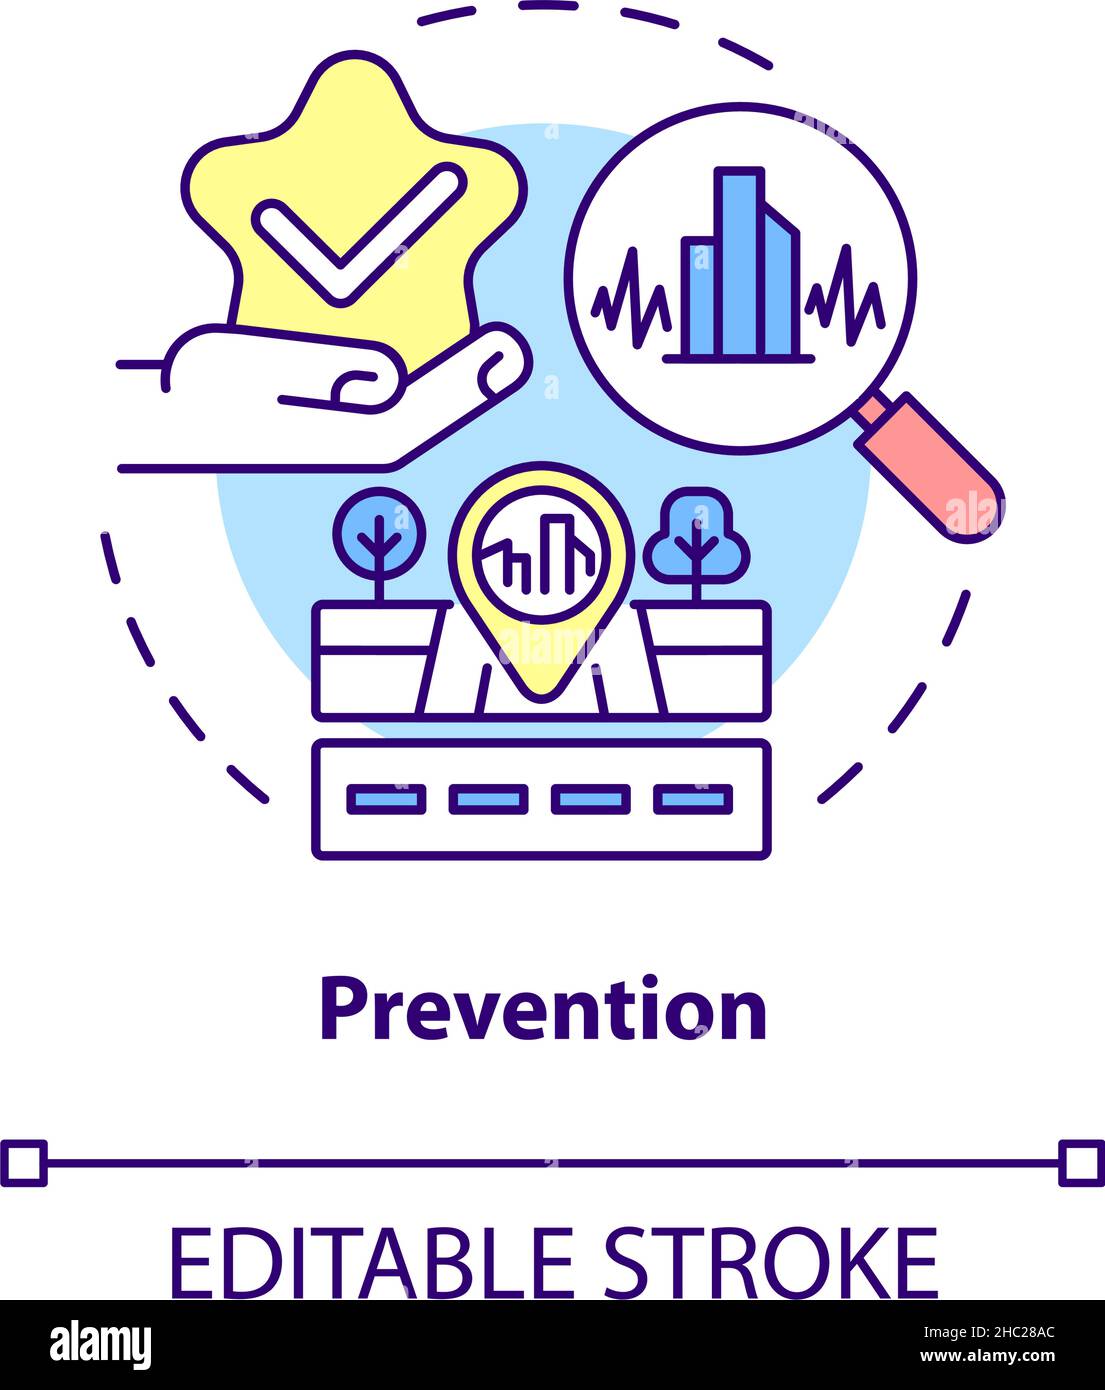 Prevention concept icon Stock Vector